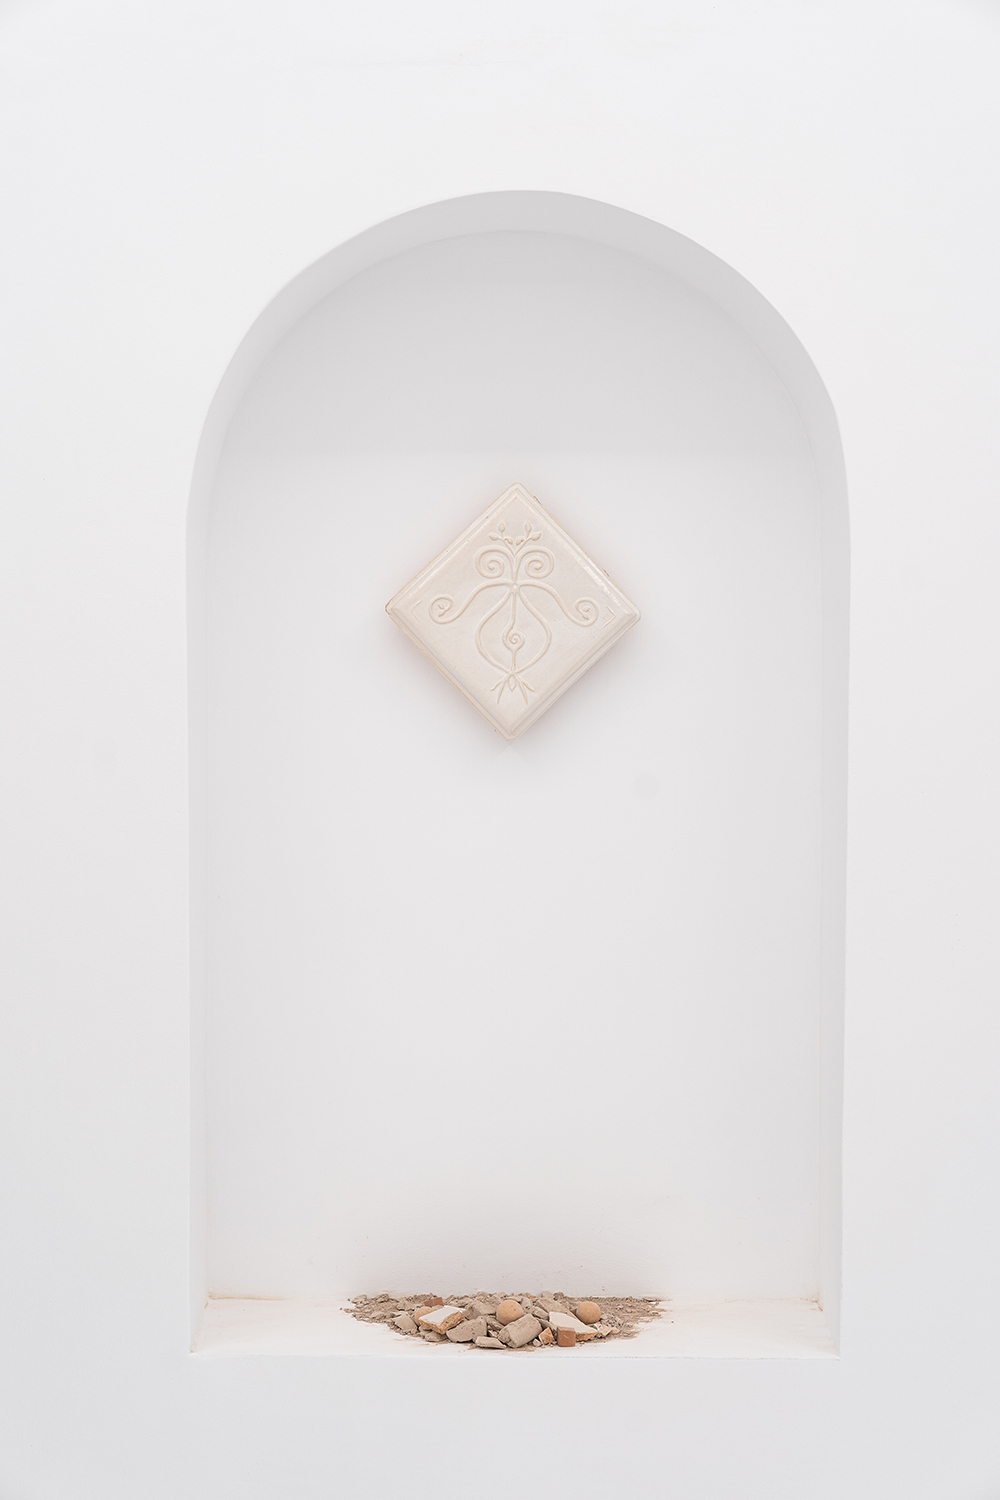 Ana Maria Stefan, Axis Mundi, 2021  installation with glazed terracotta: mixture of Medgidia kaolin clay, kaolin, Aghireș quartz sand, Șuncuiuș refractory clay and fired scrap,  tile: 22x22x6 cm